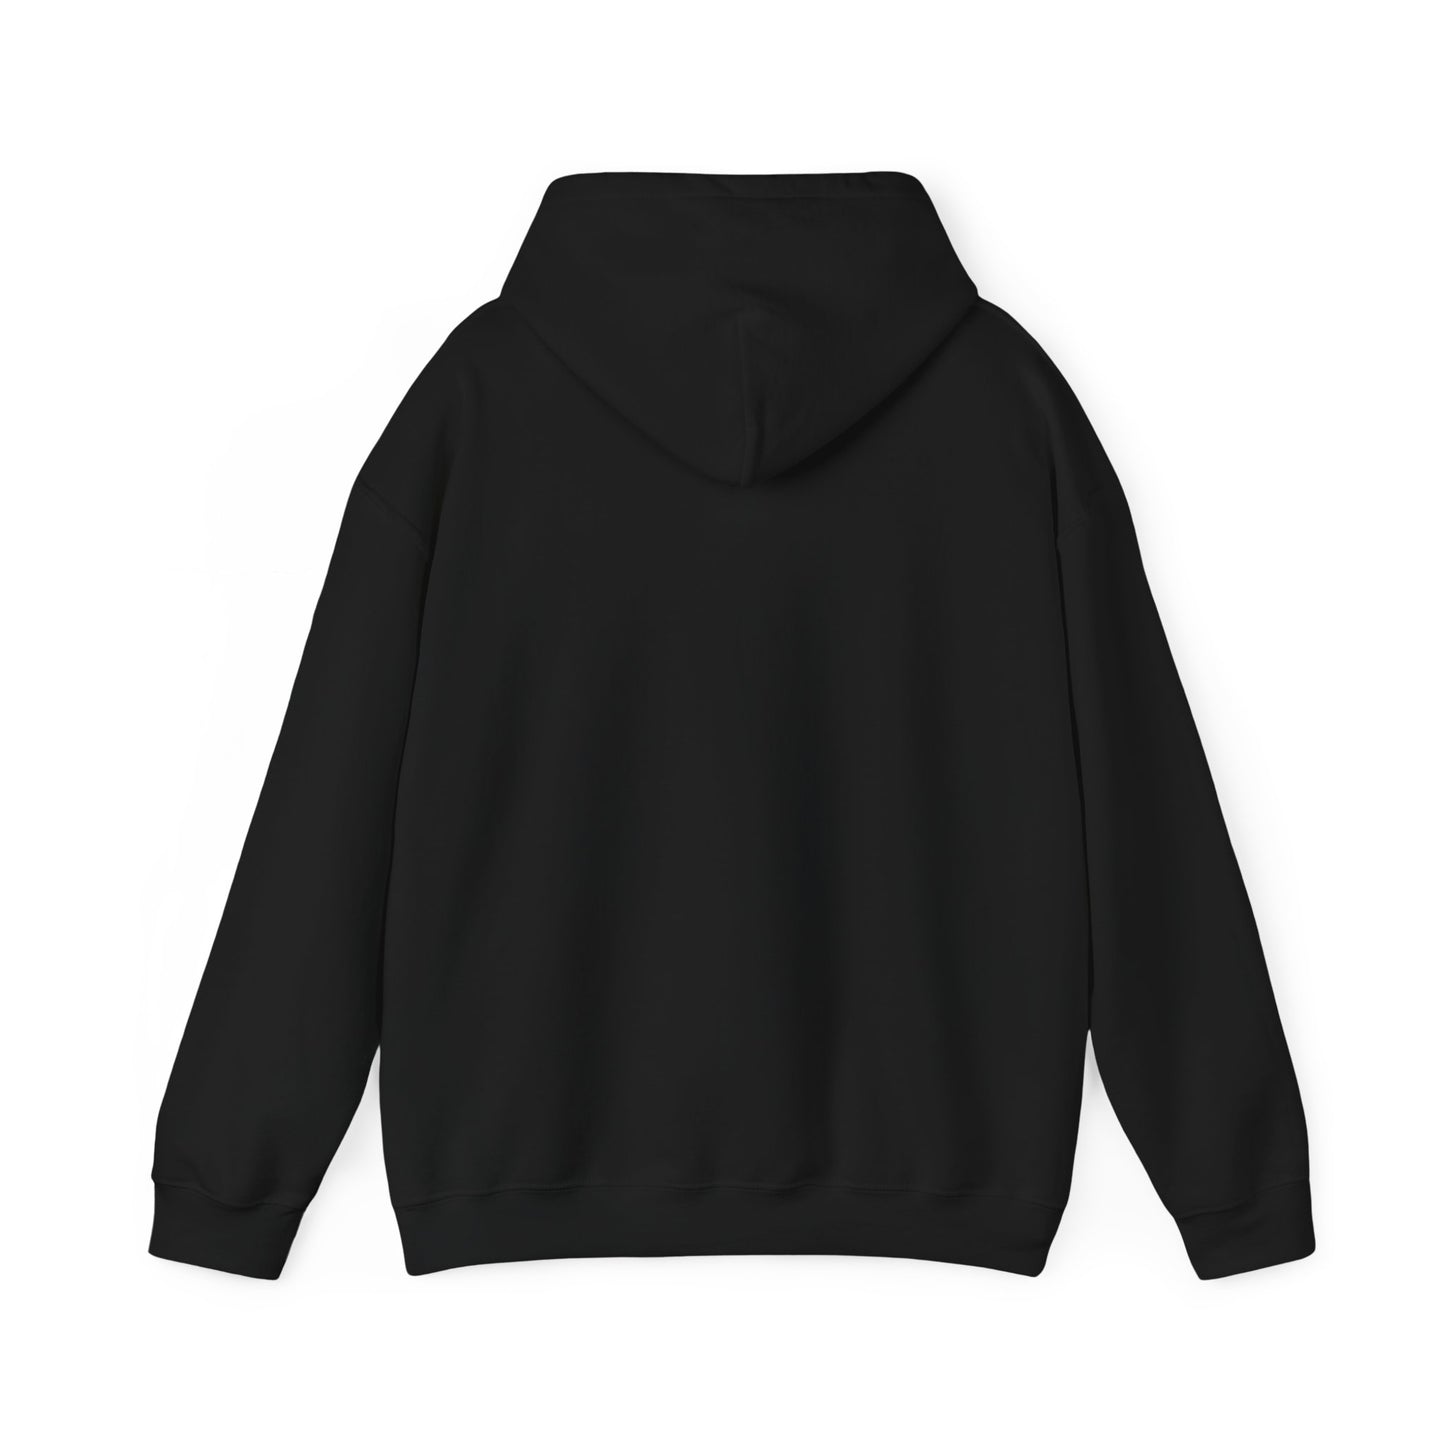 Business Consultant Hooded Sweatshirt (Unisex)